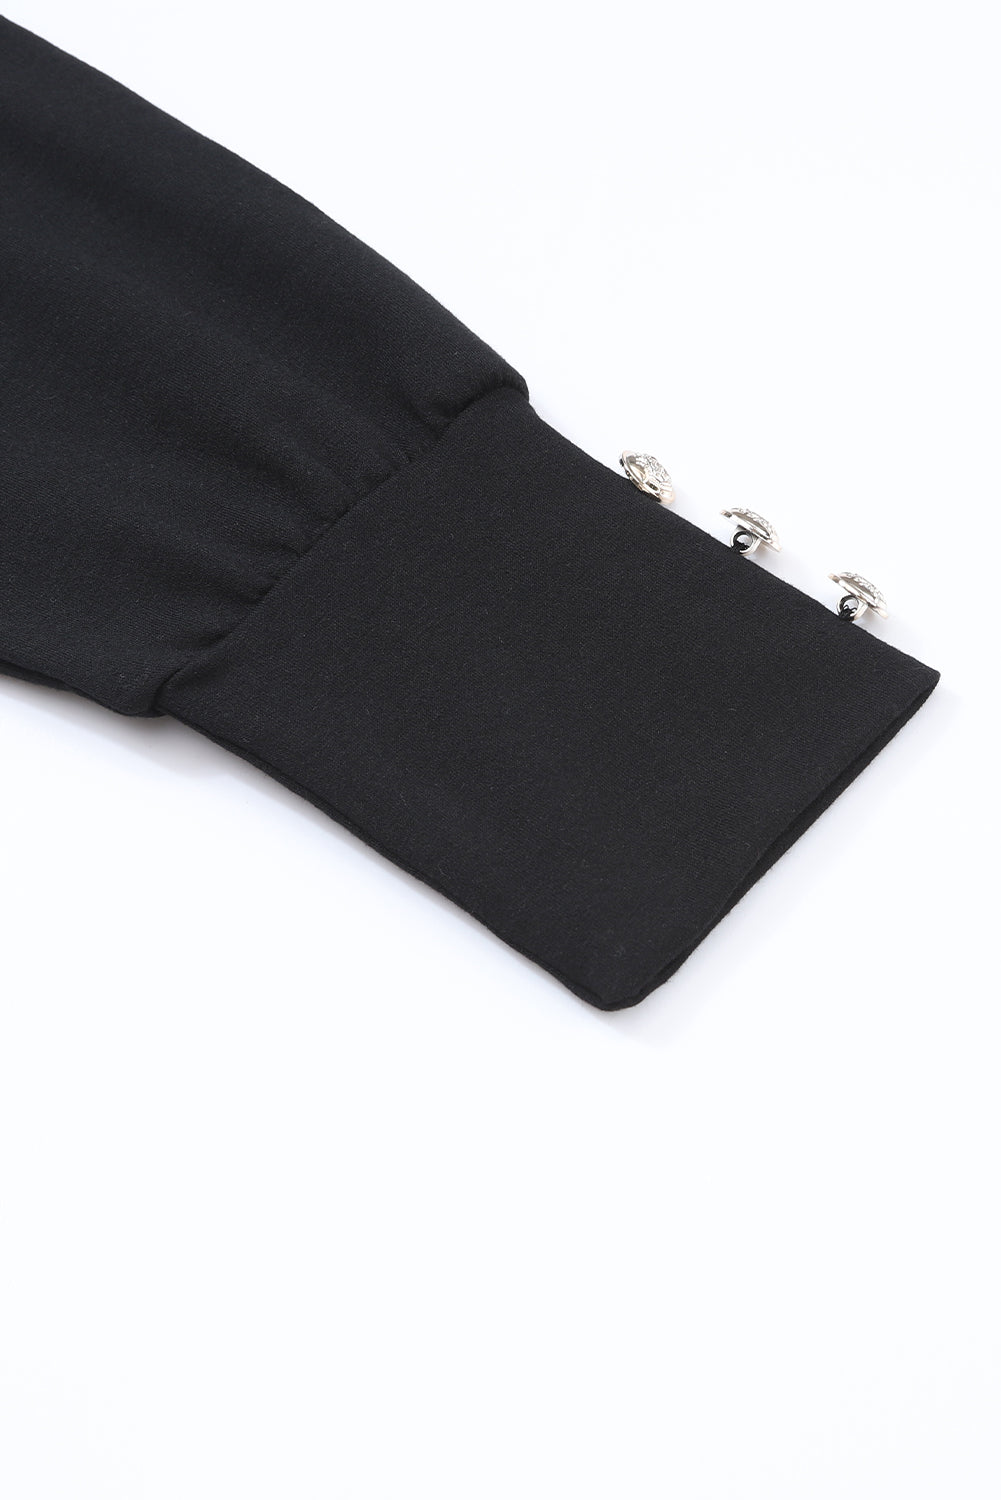 Crna asimetrična majica dugih rukava s kopčanjem